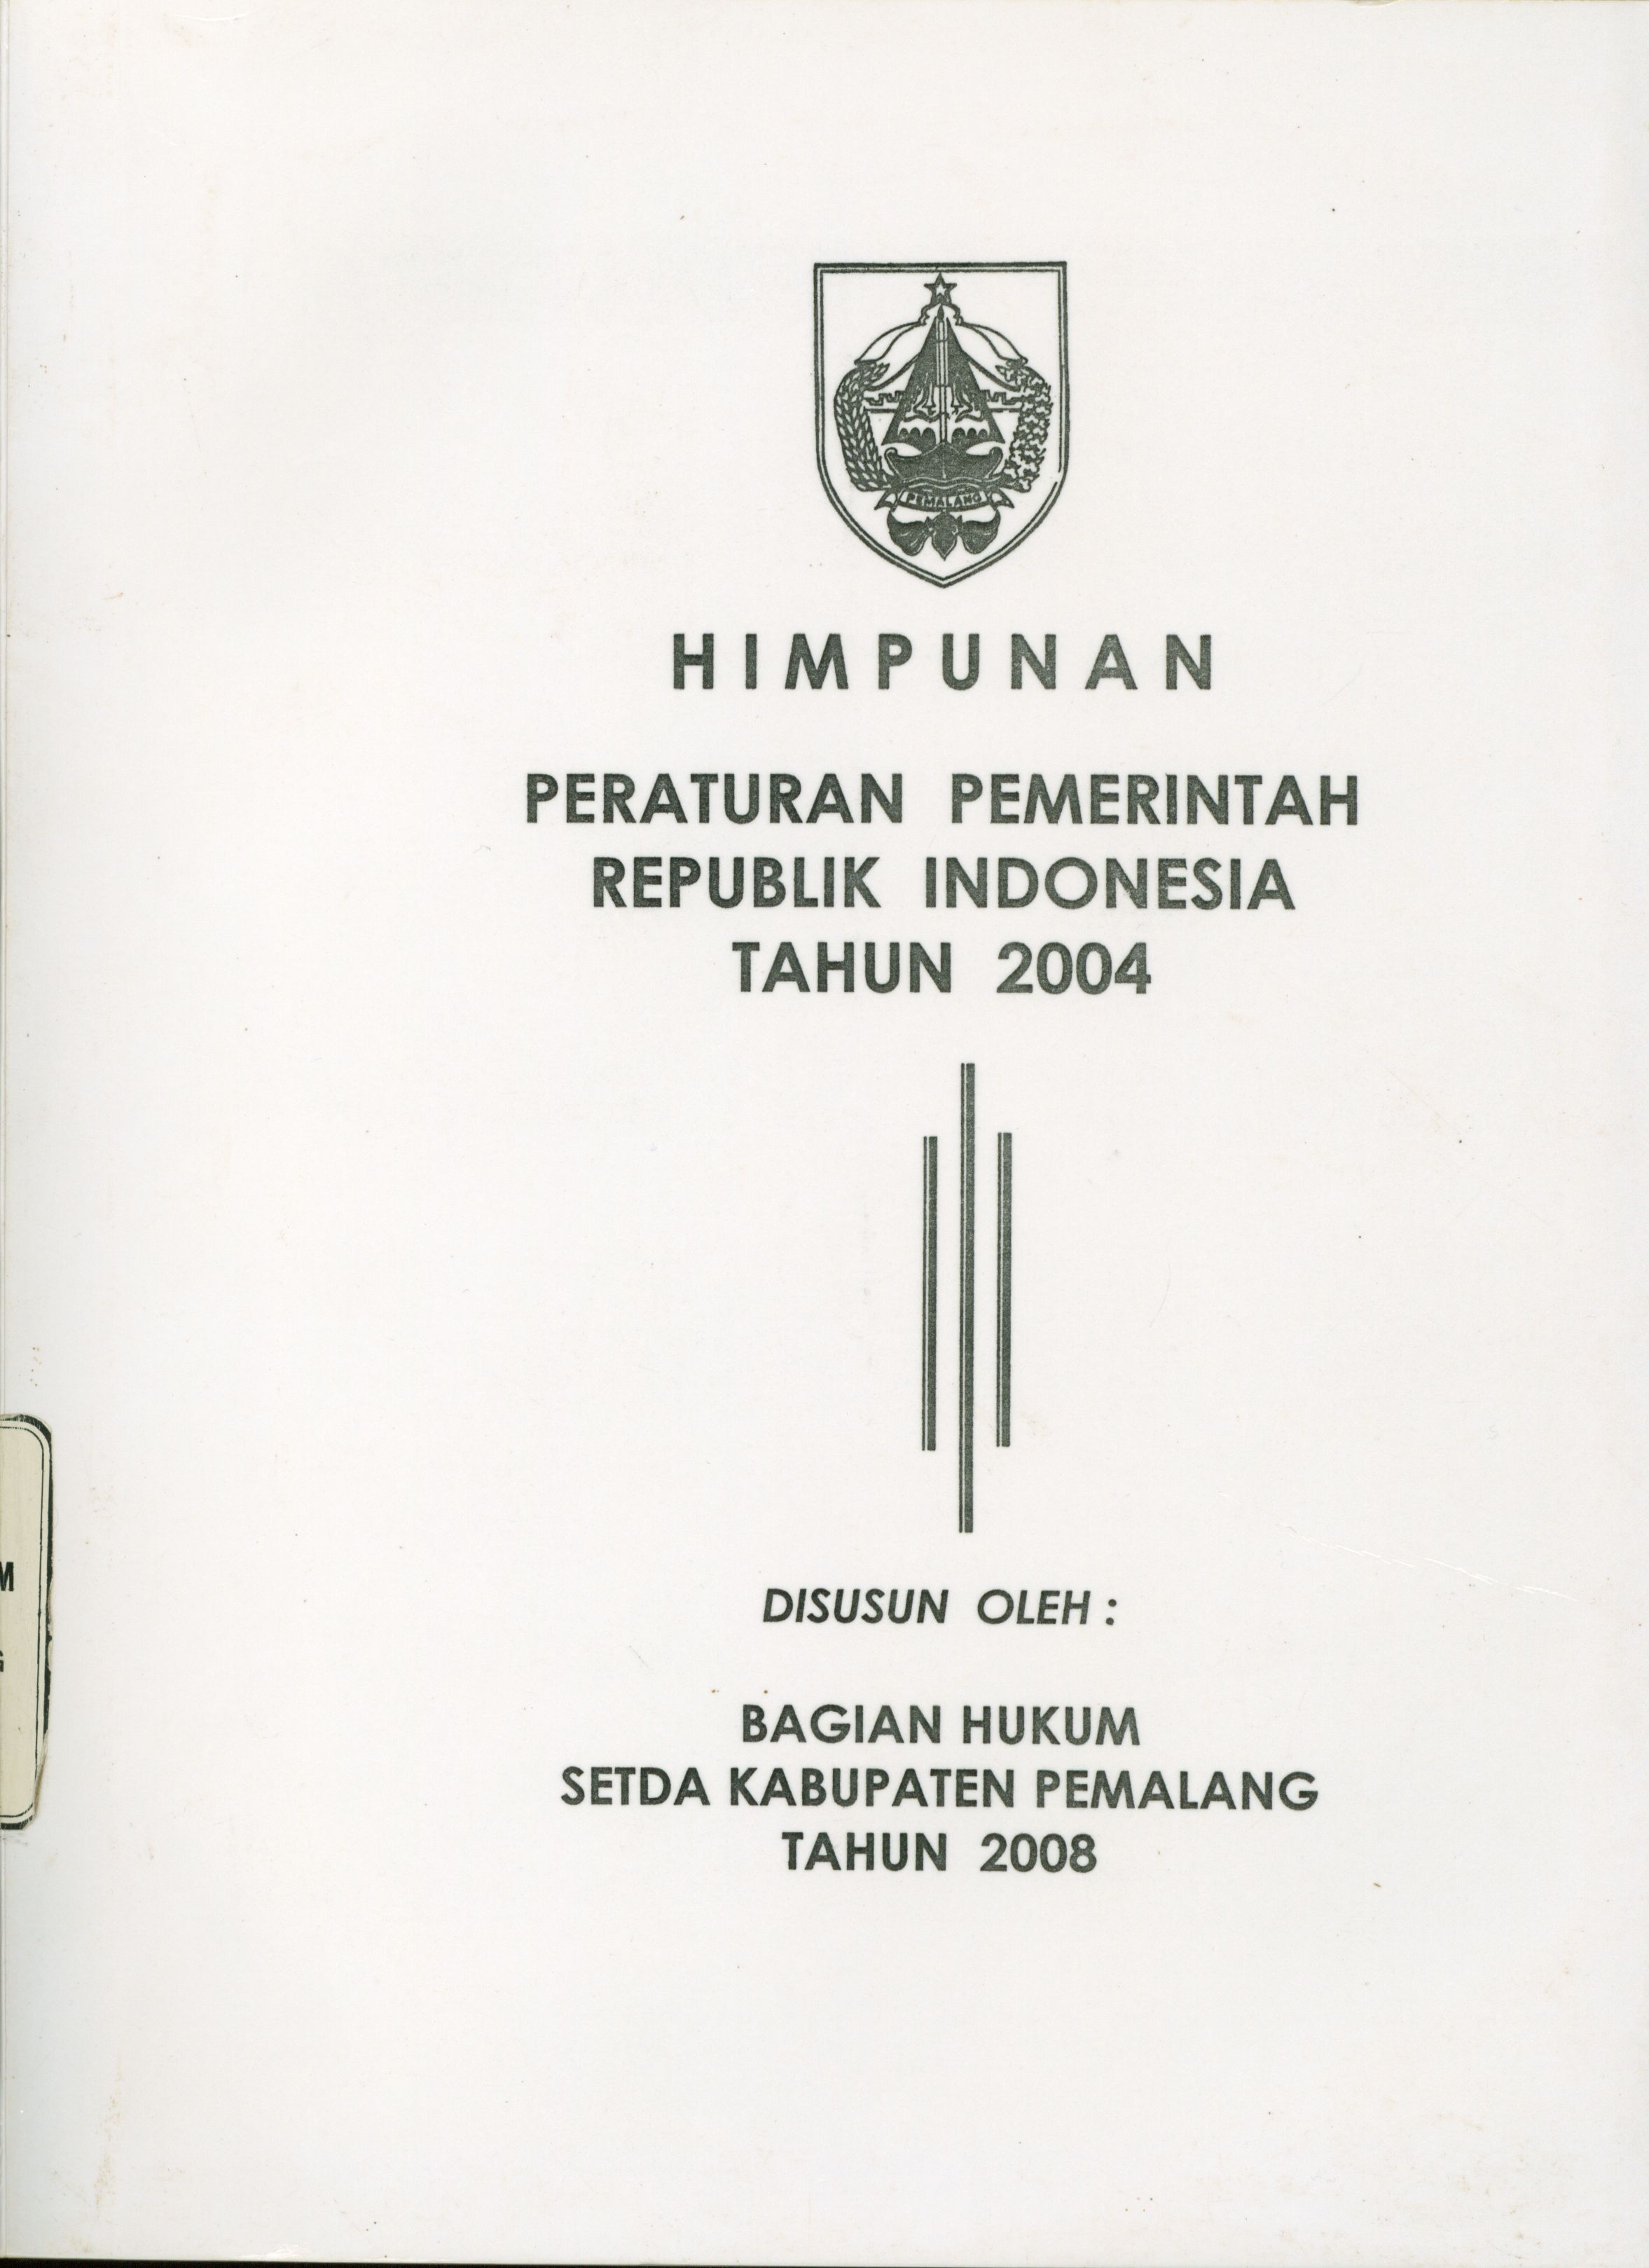 Himpunan Peraturan Pemerintah Republik Indonesia Tahun 2004